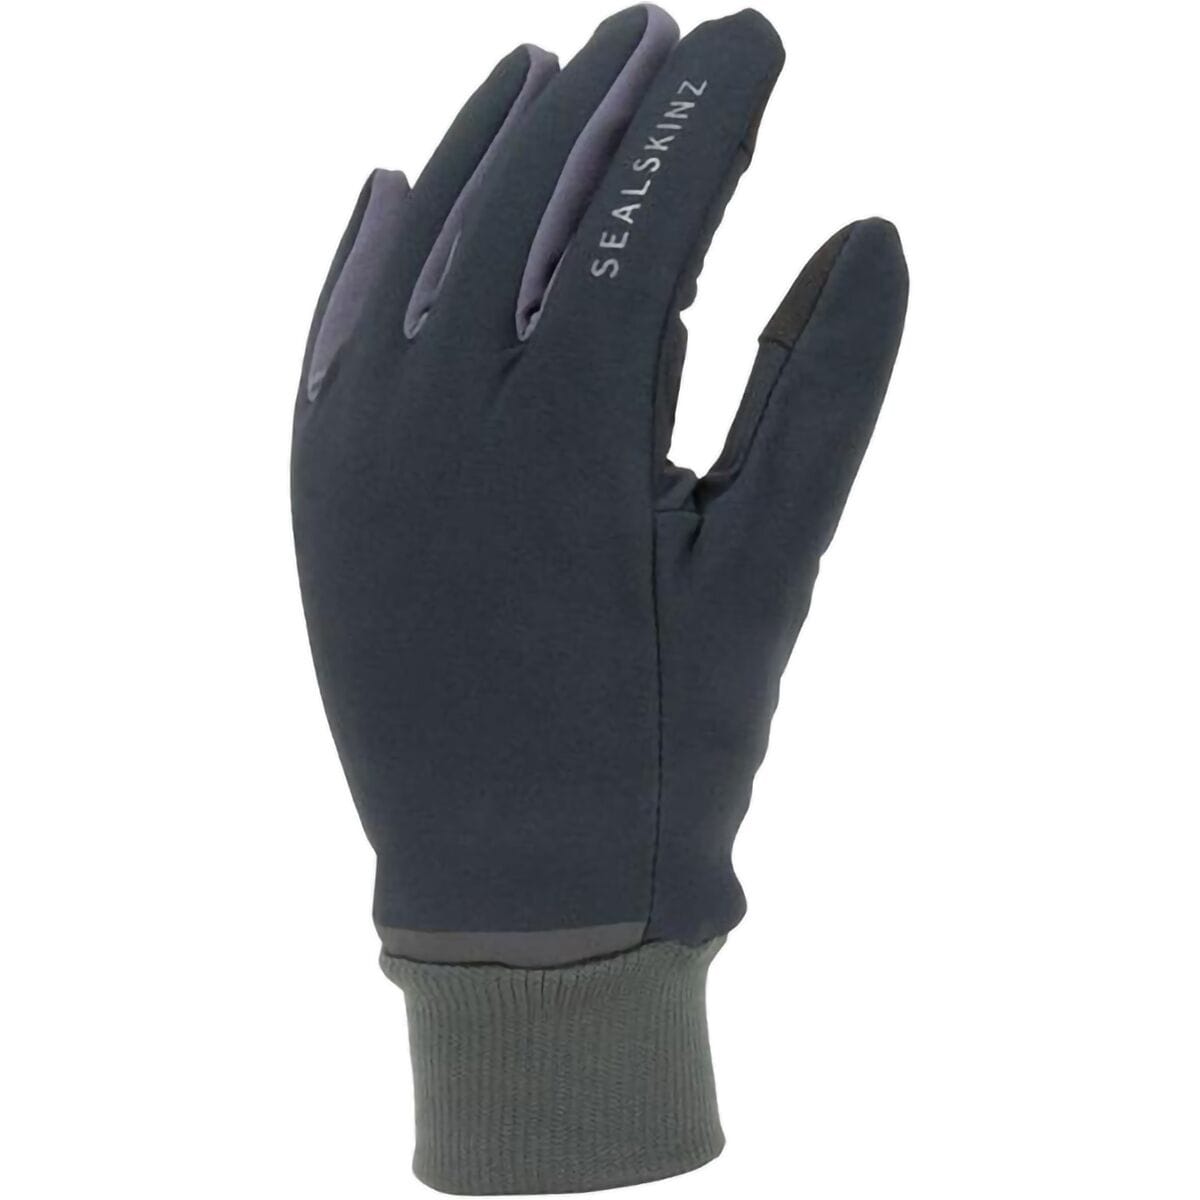 SealSkinz Waterproof All Weather Lightweight Fusion Control Glove